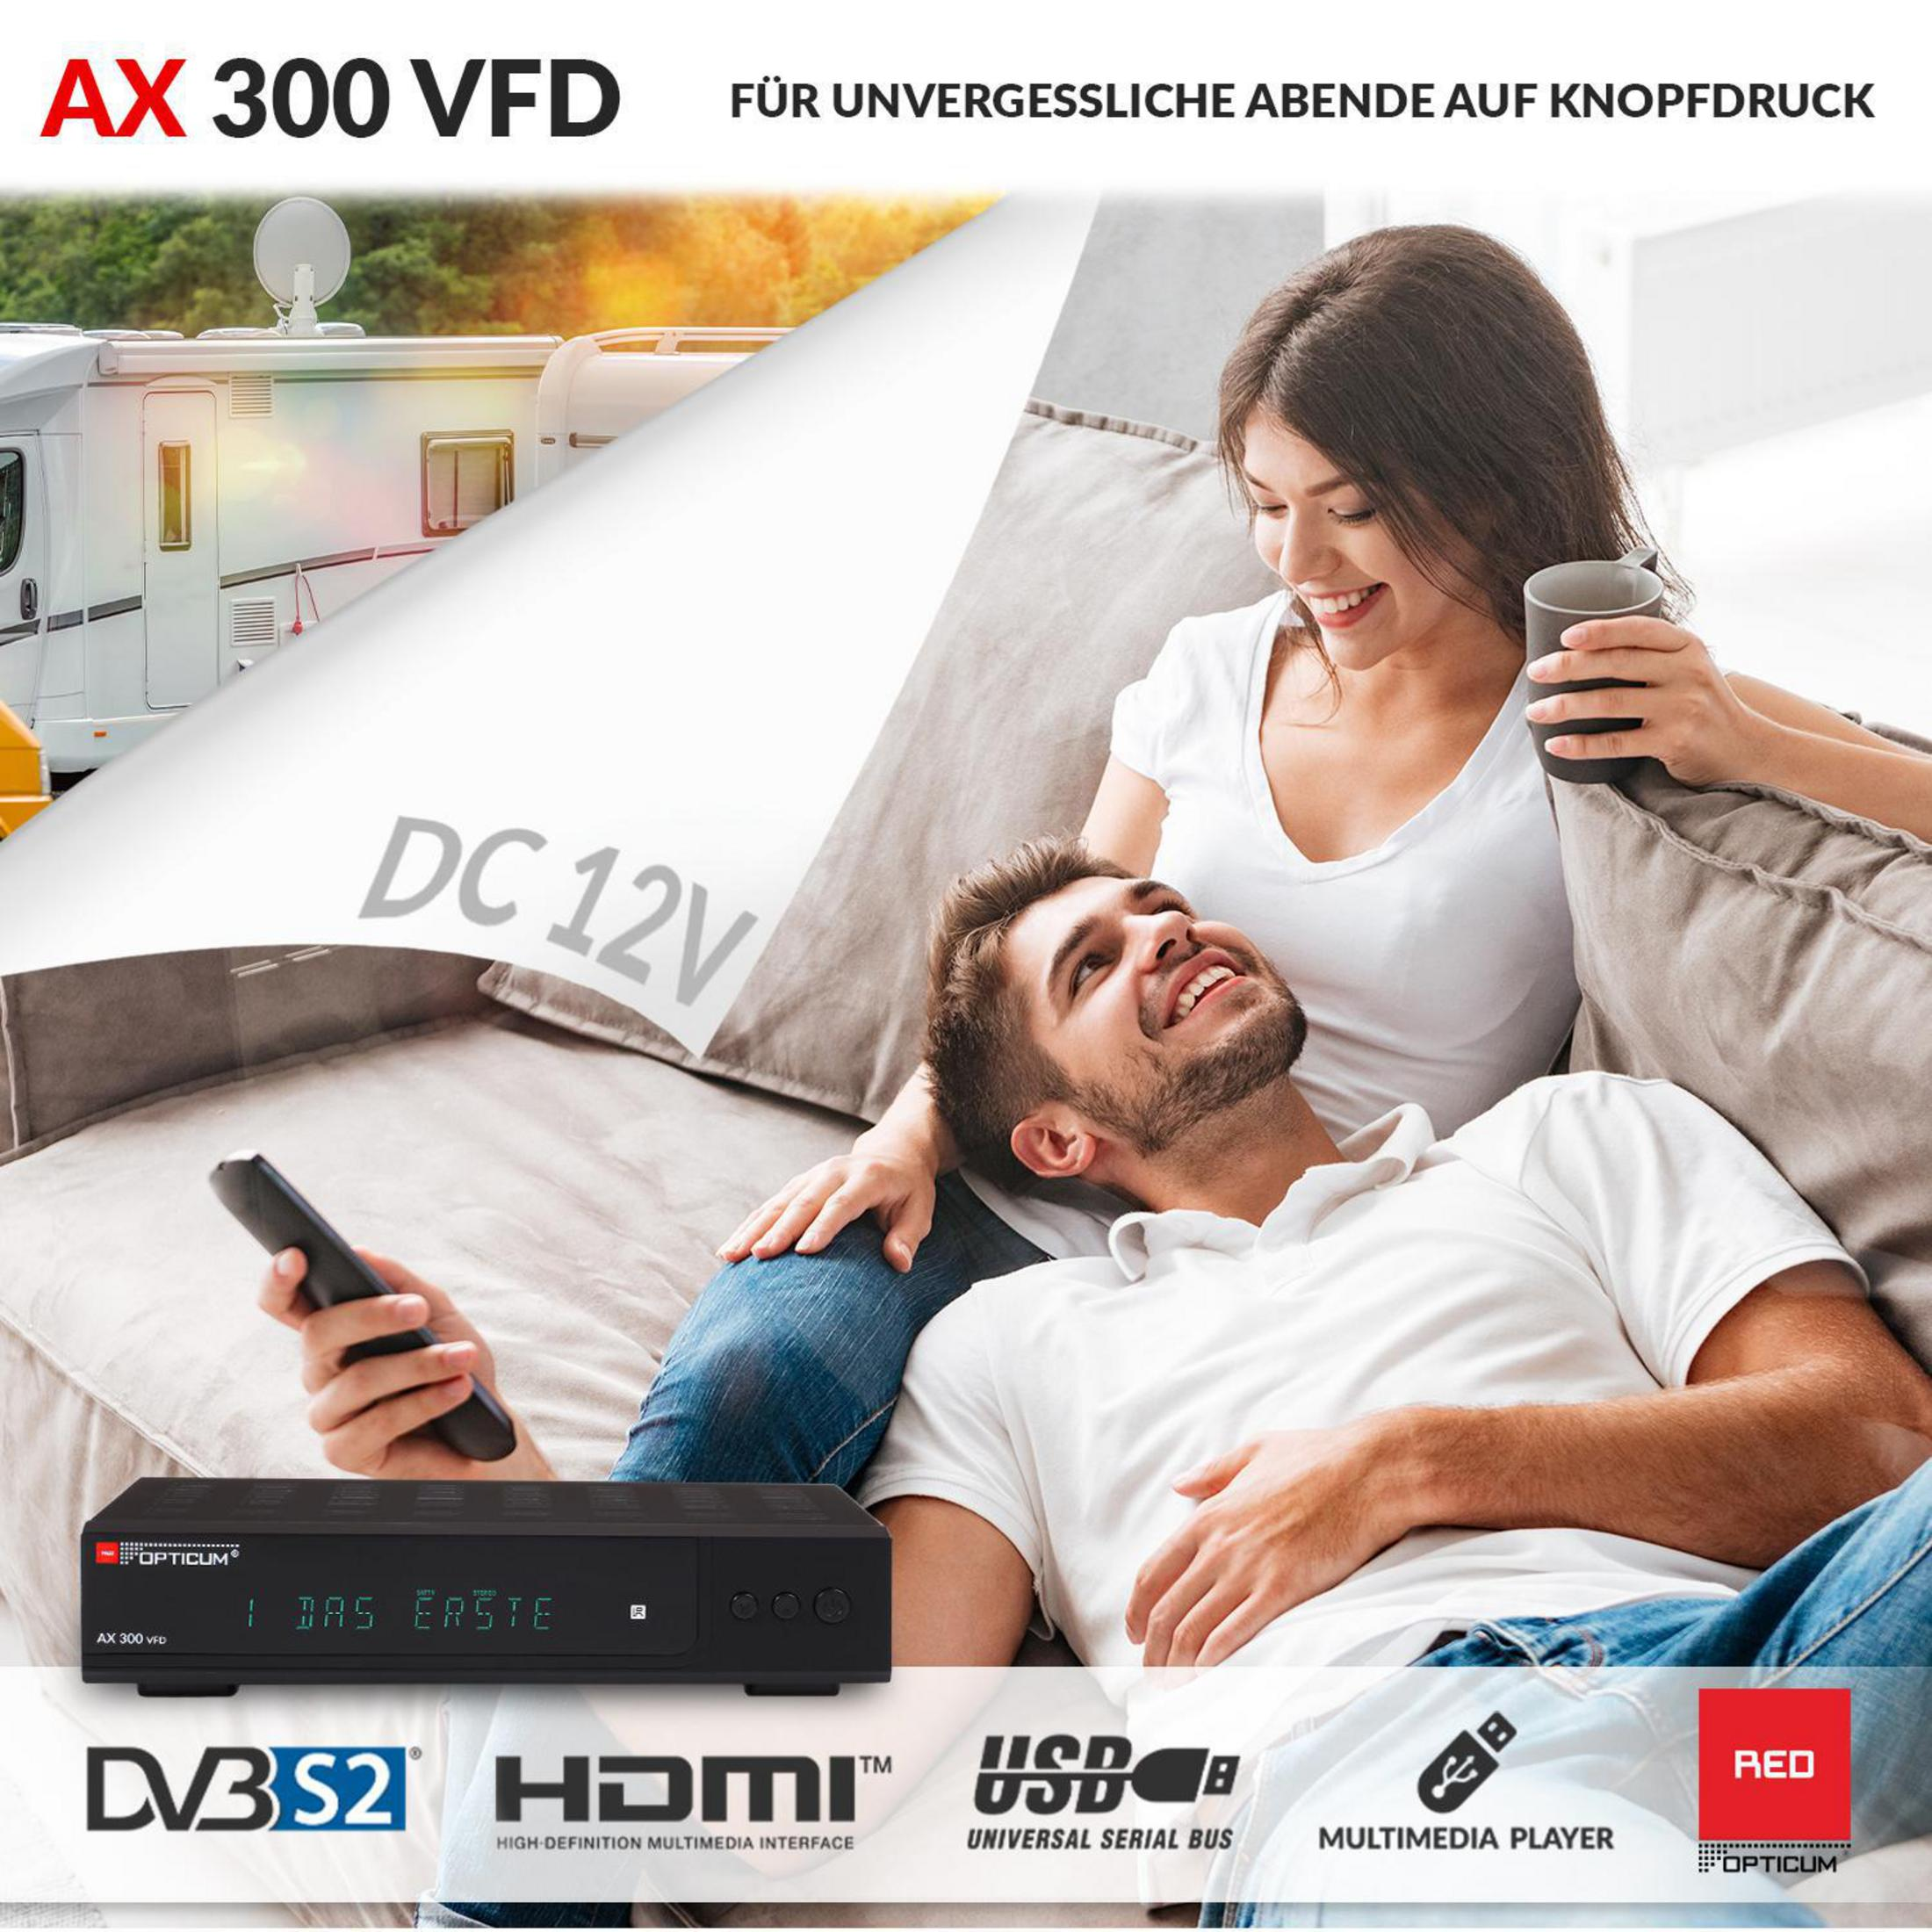 RED OPTICUM Receiver VFD alphanumerischem 12 AX Sat Digitaler I - V DVB-S, Display schwarz) DVB-S2, HD-TV mit 300 Receiver DVB-S2 Satelliten-Receiver (HDTV